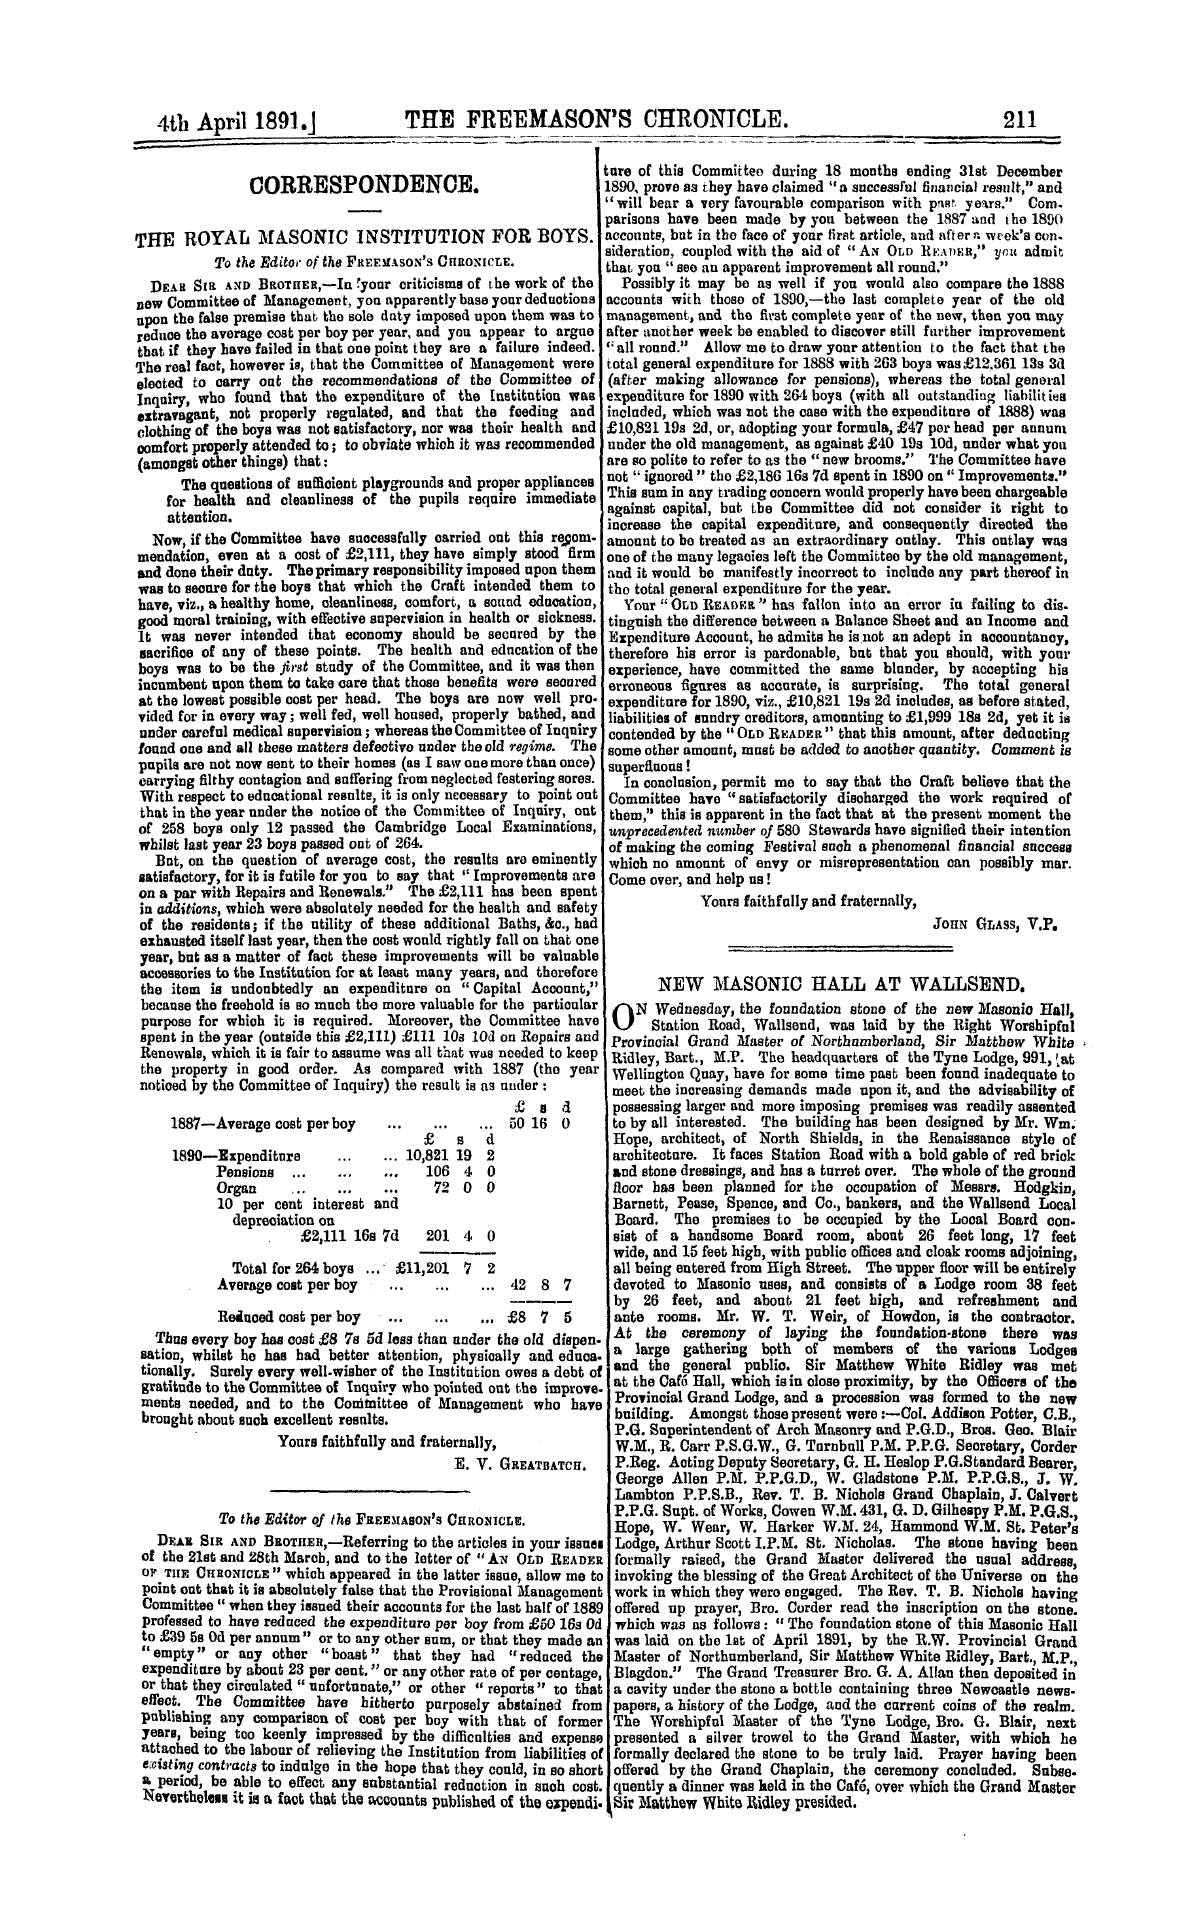 The Freemason's Chronicle: 1891-04-04: 3